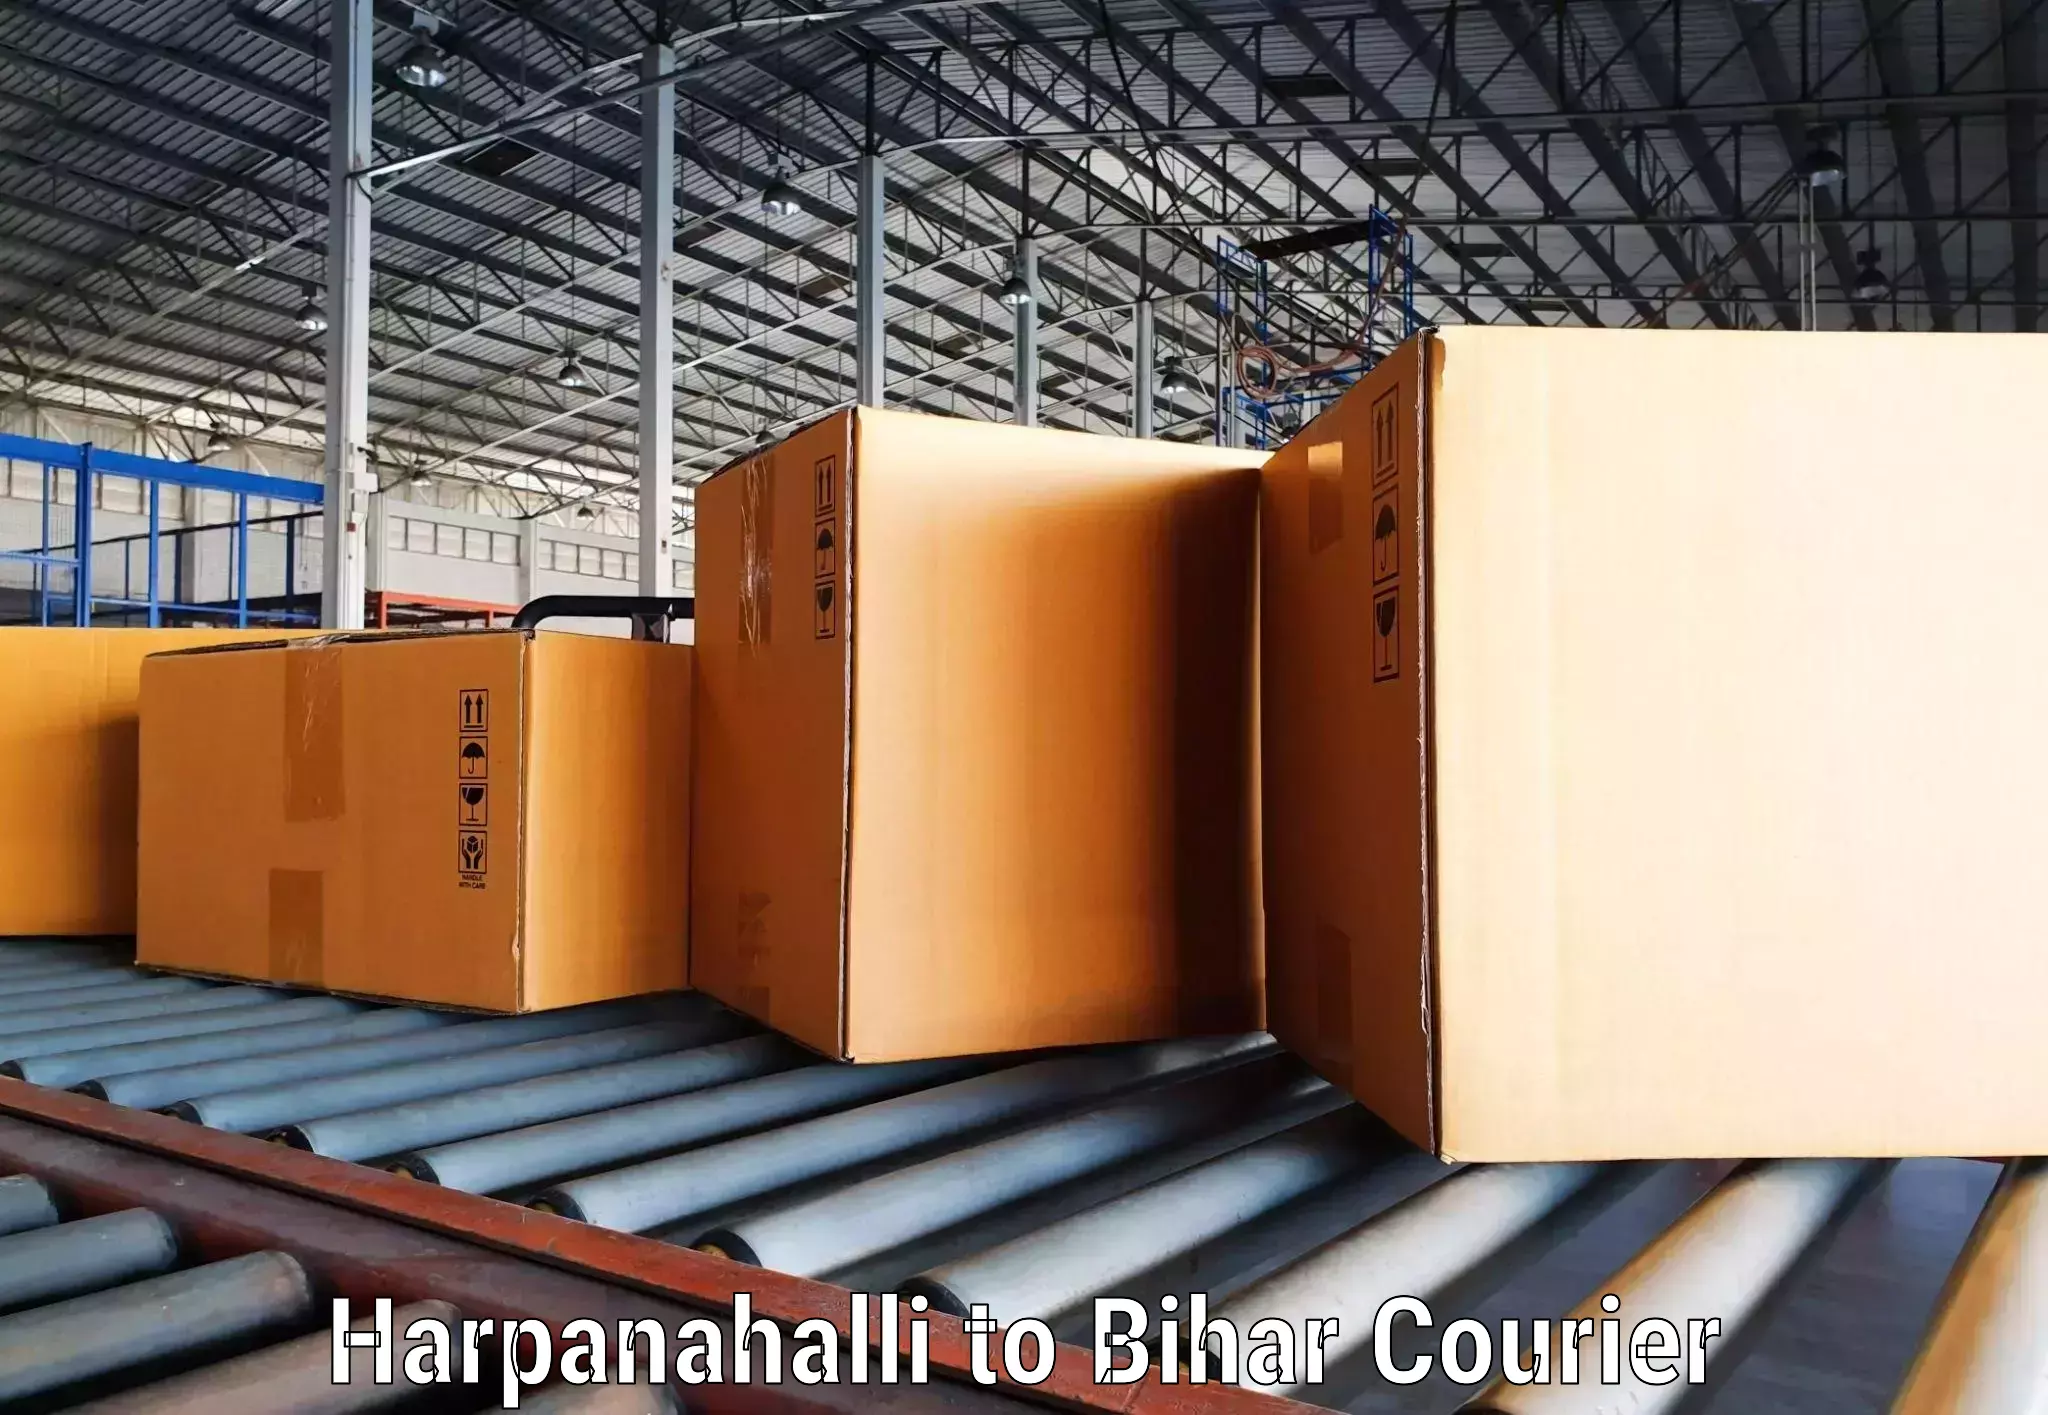 Digital courier platforms Harpanahalli to Marhowrah